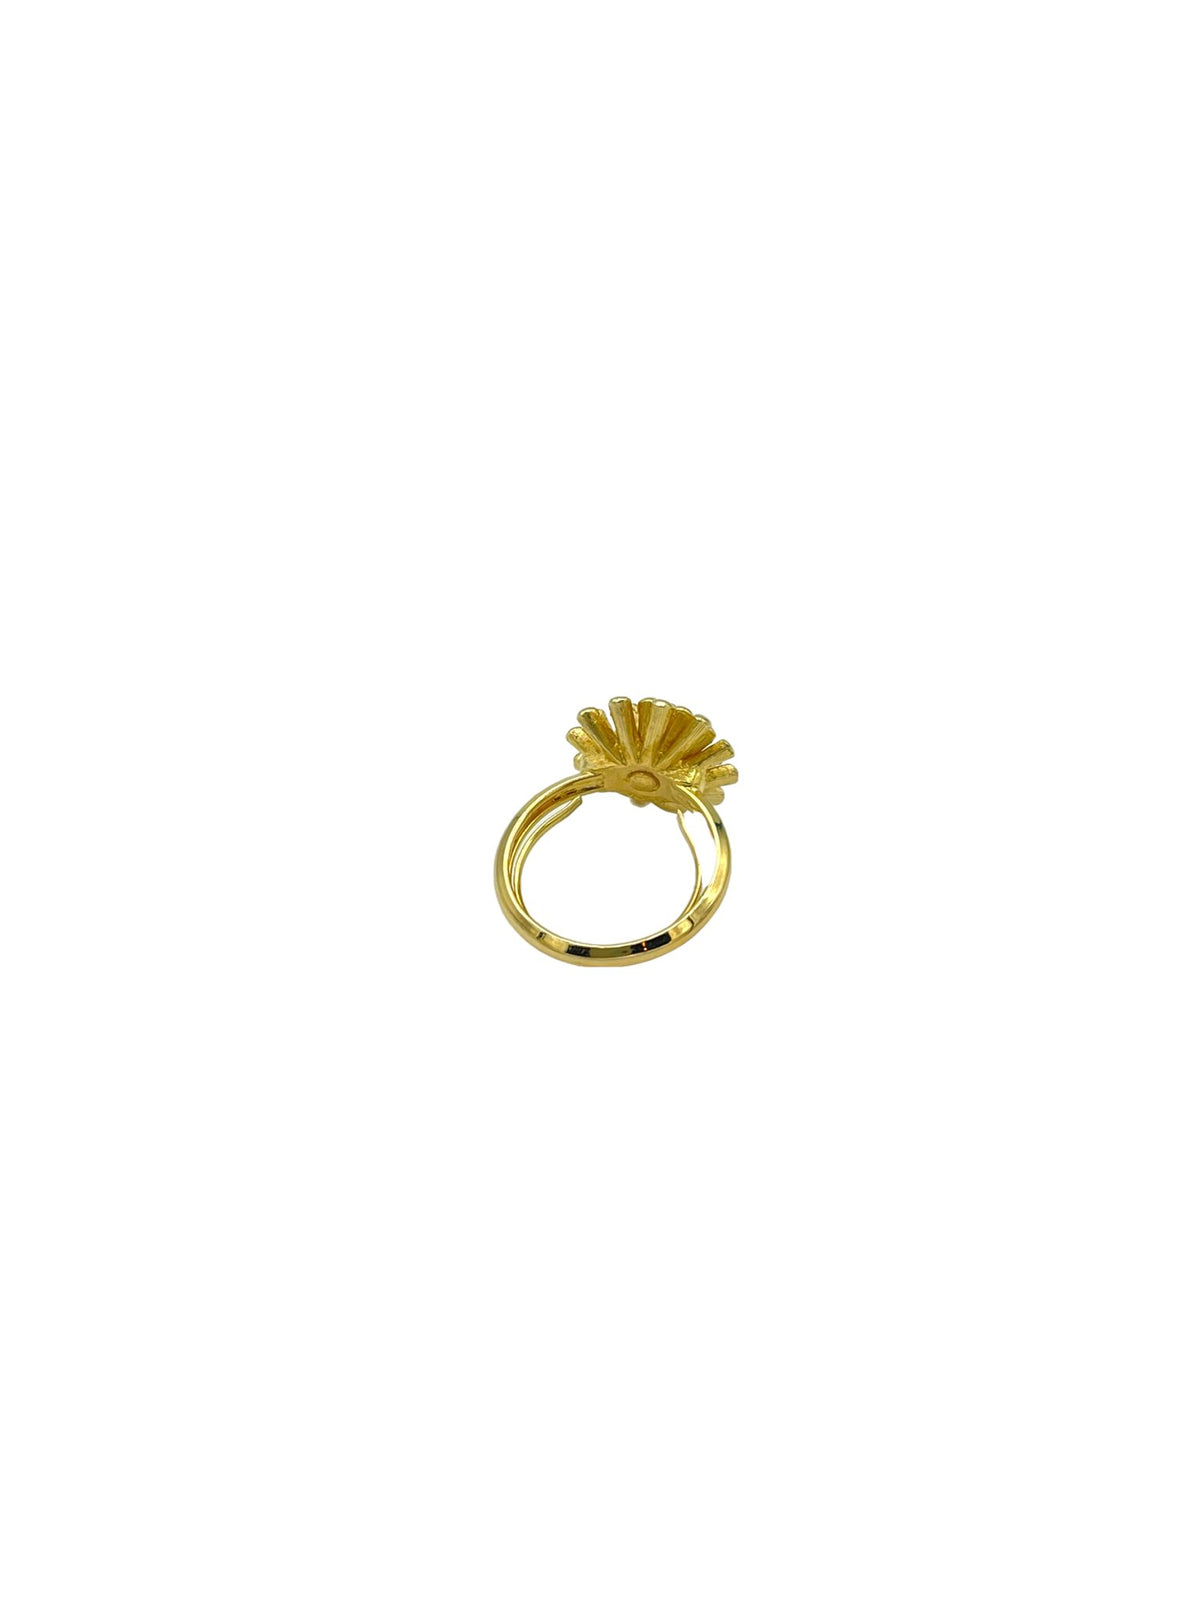 Avon Gold Starburst Vintage Adjustable Cocktail Ring - 24 Wishes Vintage Jewelry